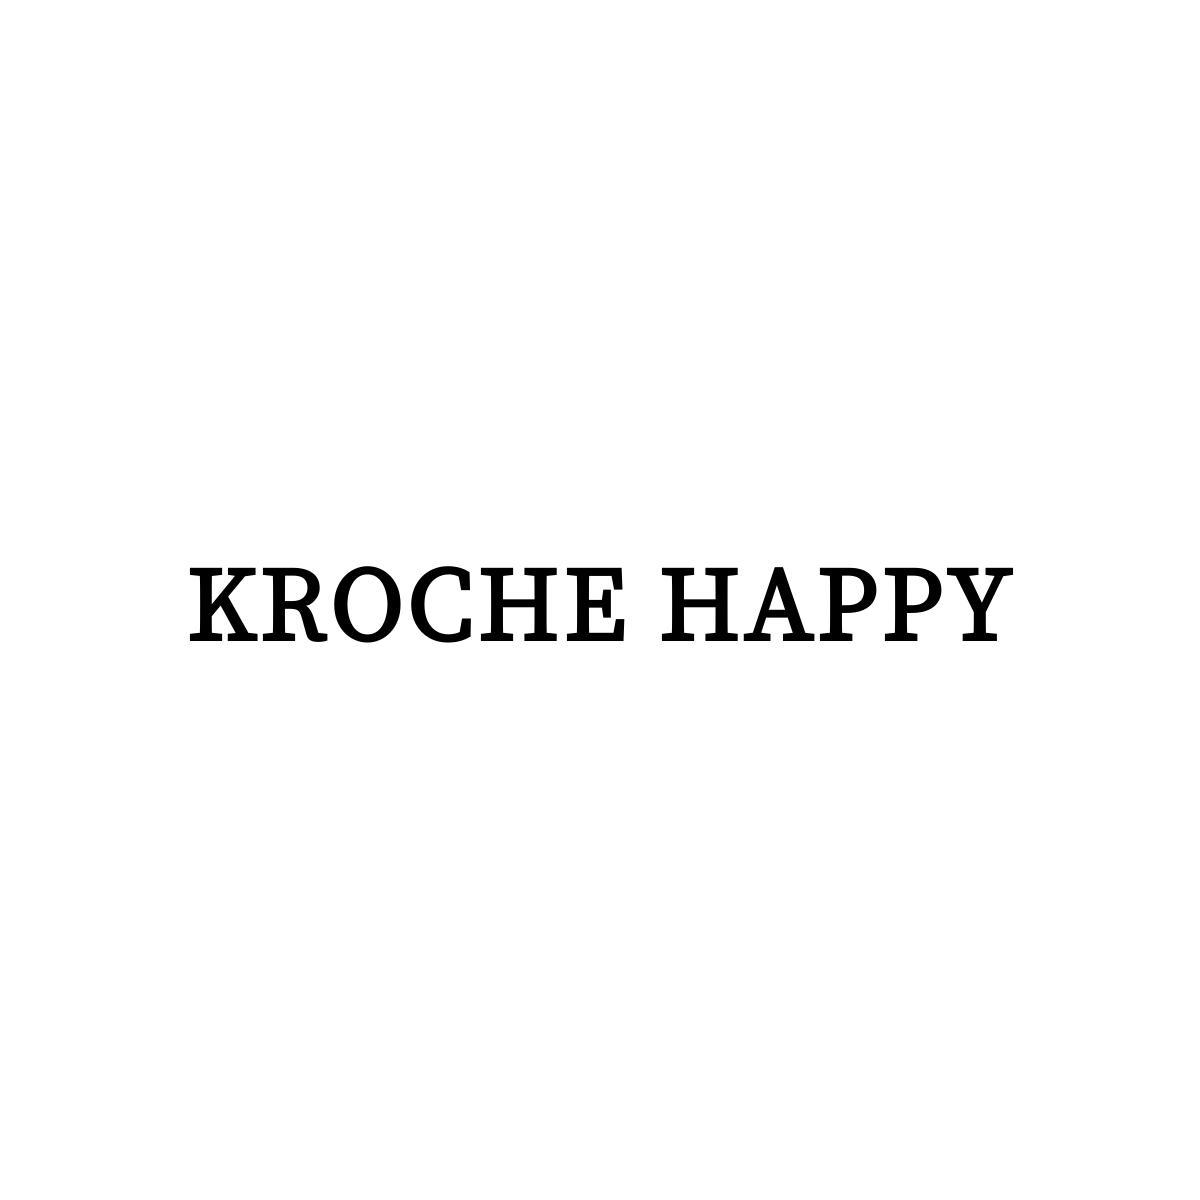 25类-服装鞋帽KROCHE HAPPY商标转让